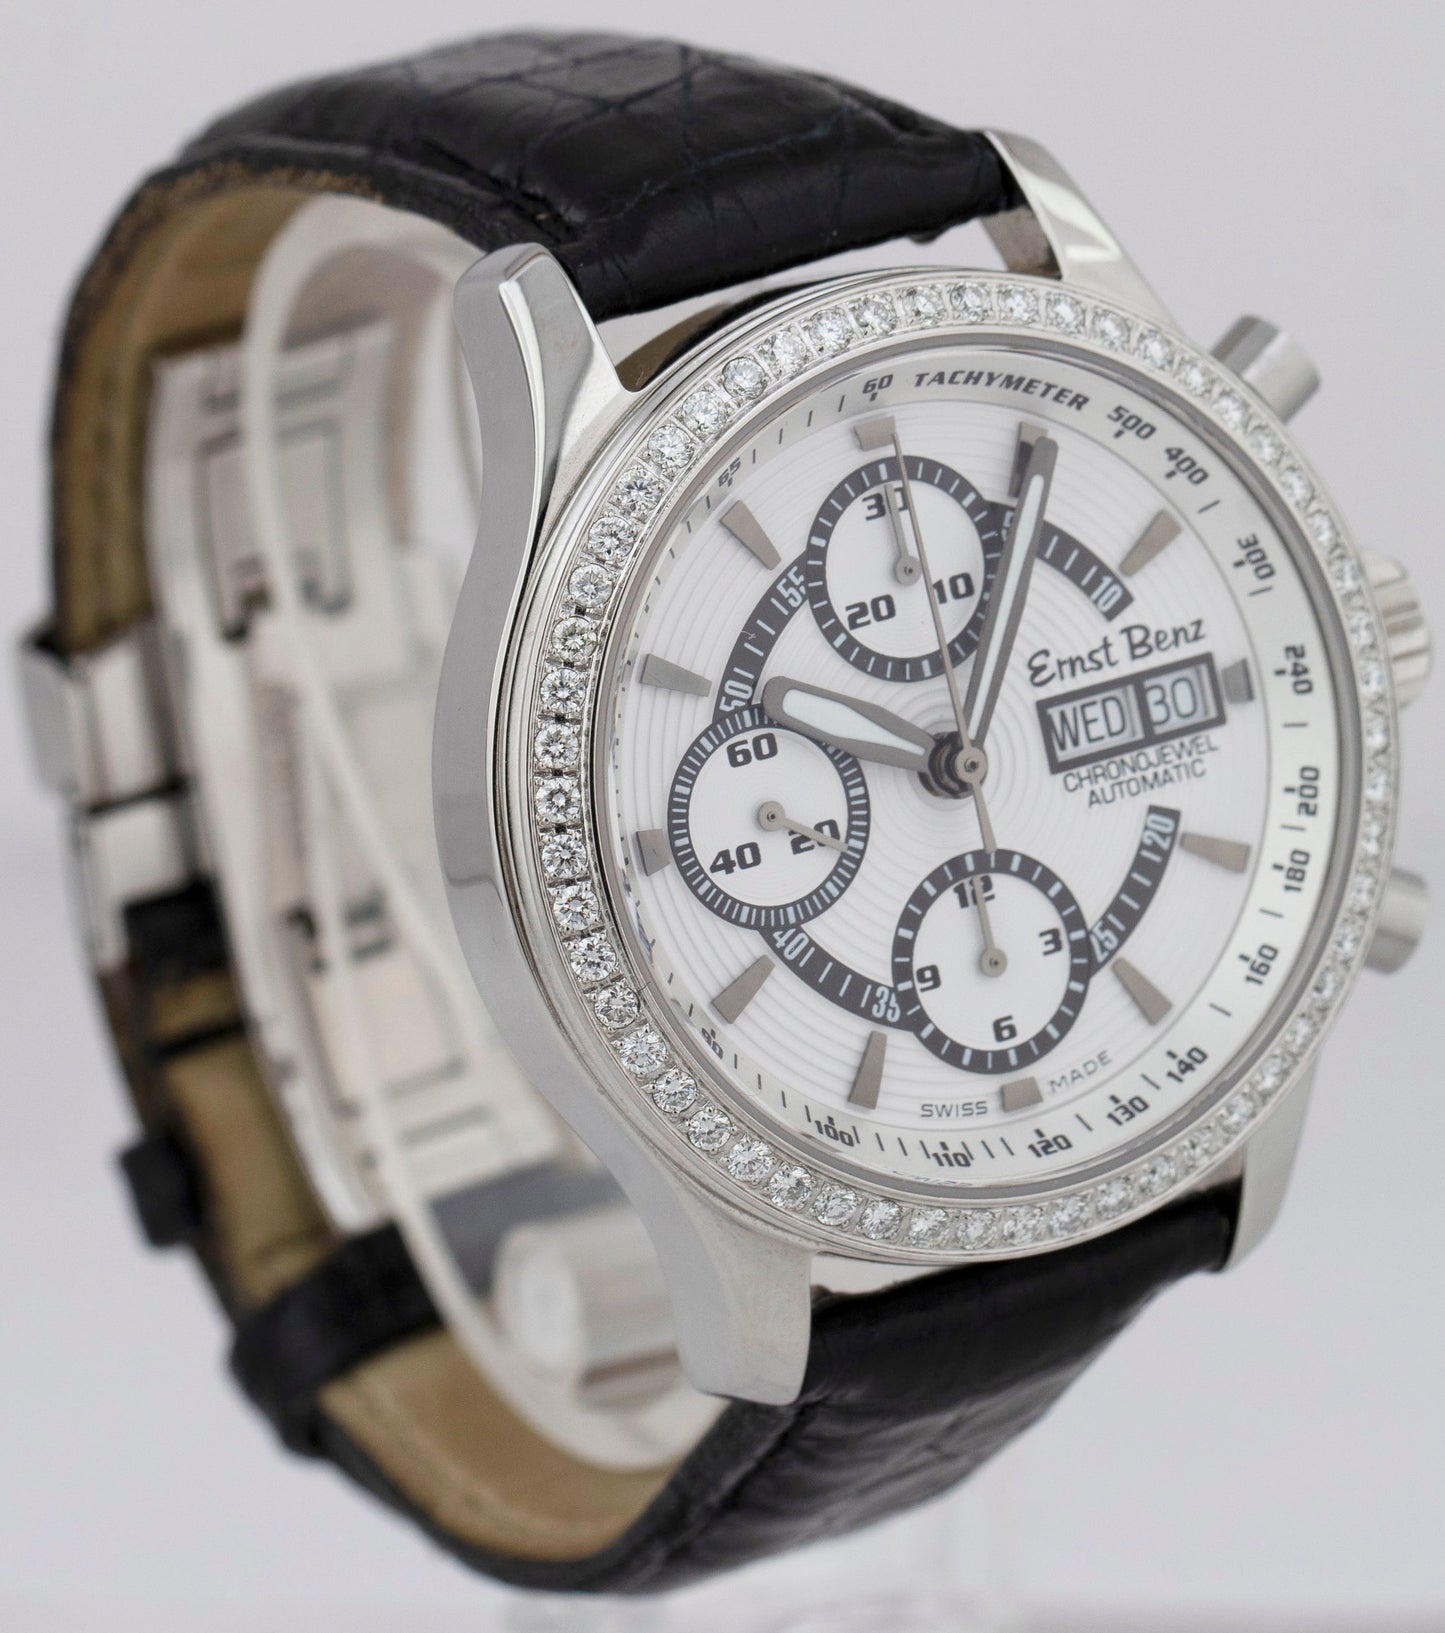 Ernst Benz ChronoJewel DIAMOND Stainless Steel Chronograph Watch GC20122D